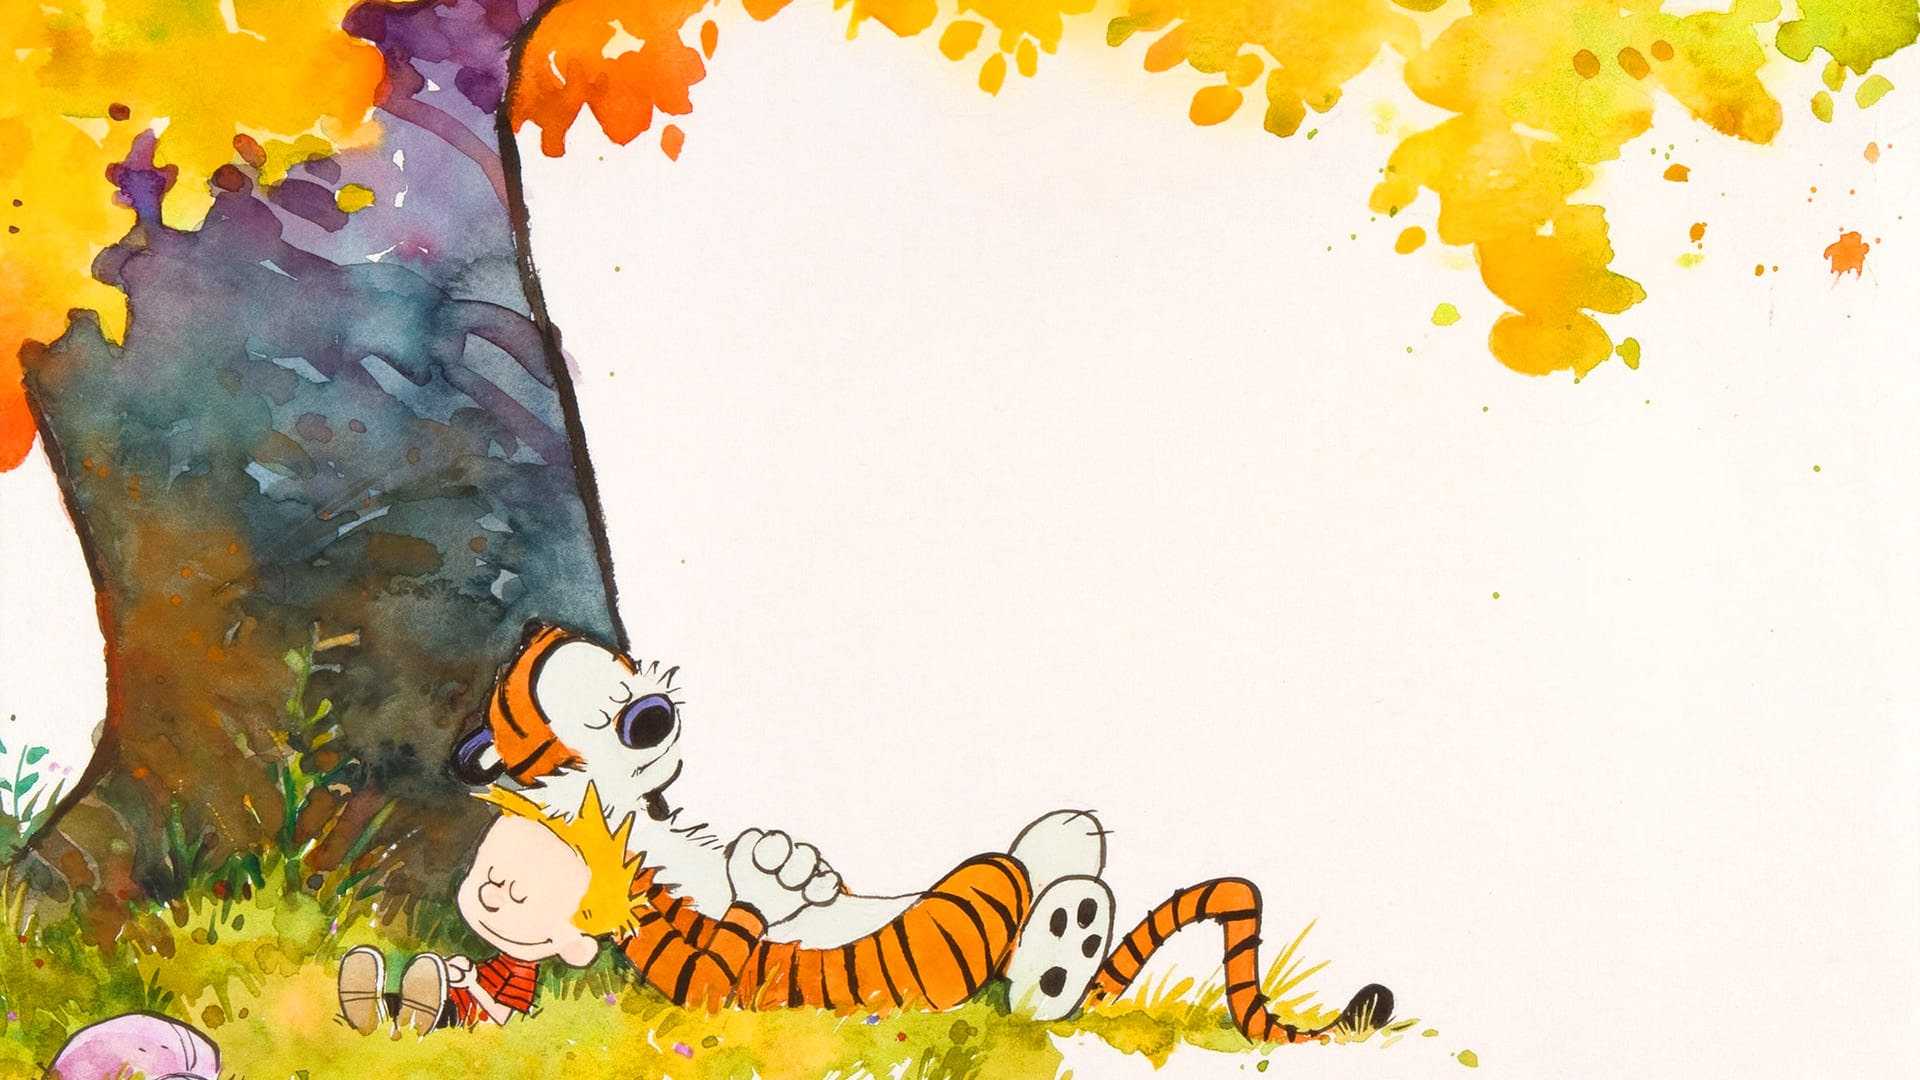 Calvin And Hobbes Wallpaper - iXpap